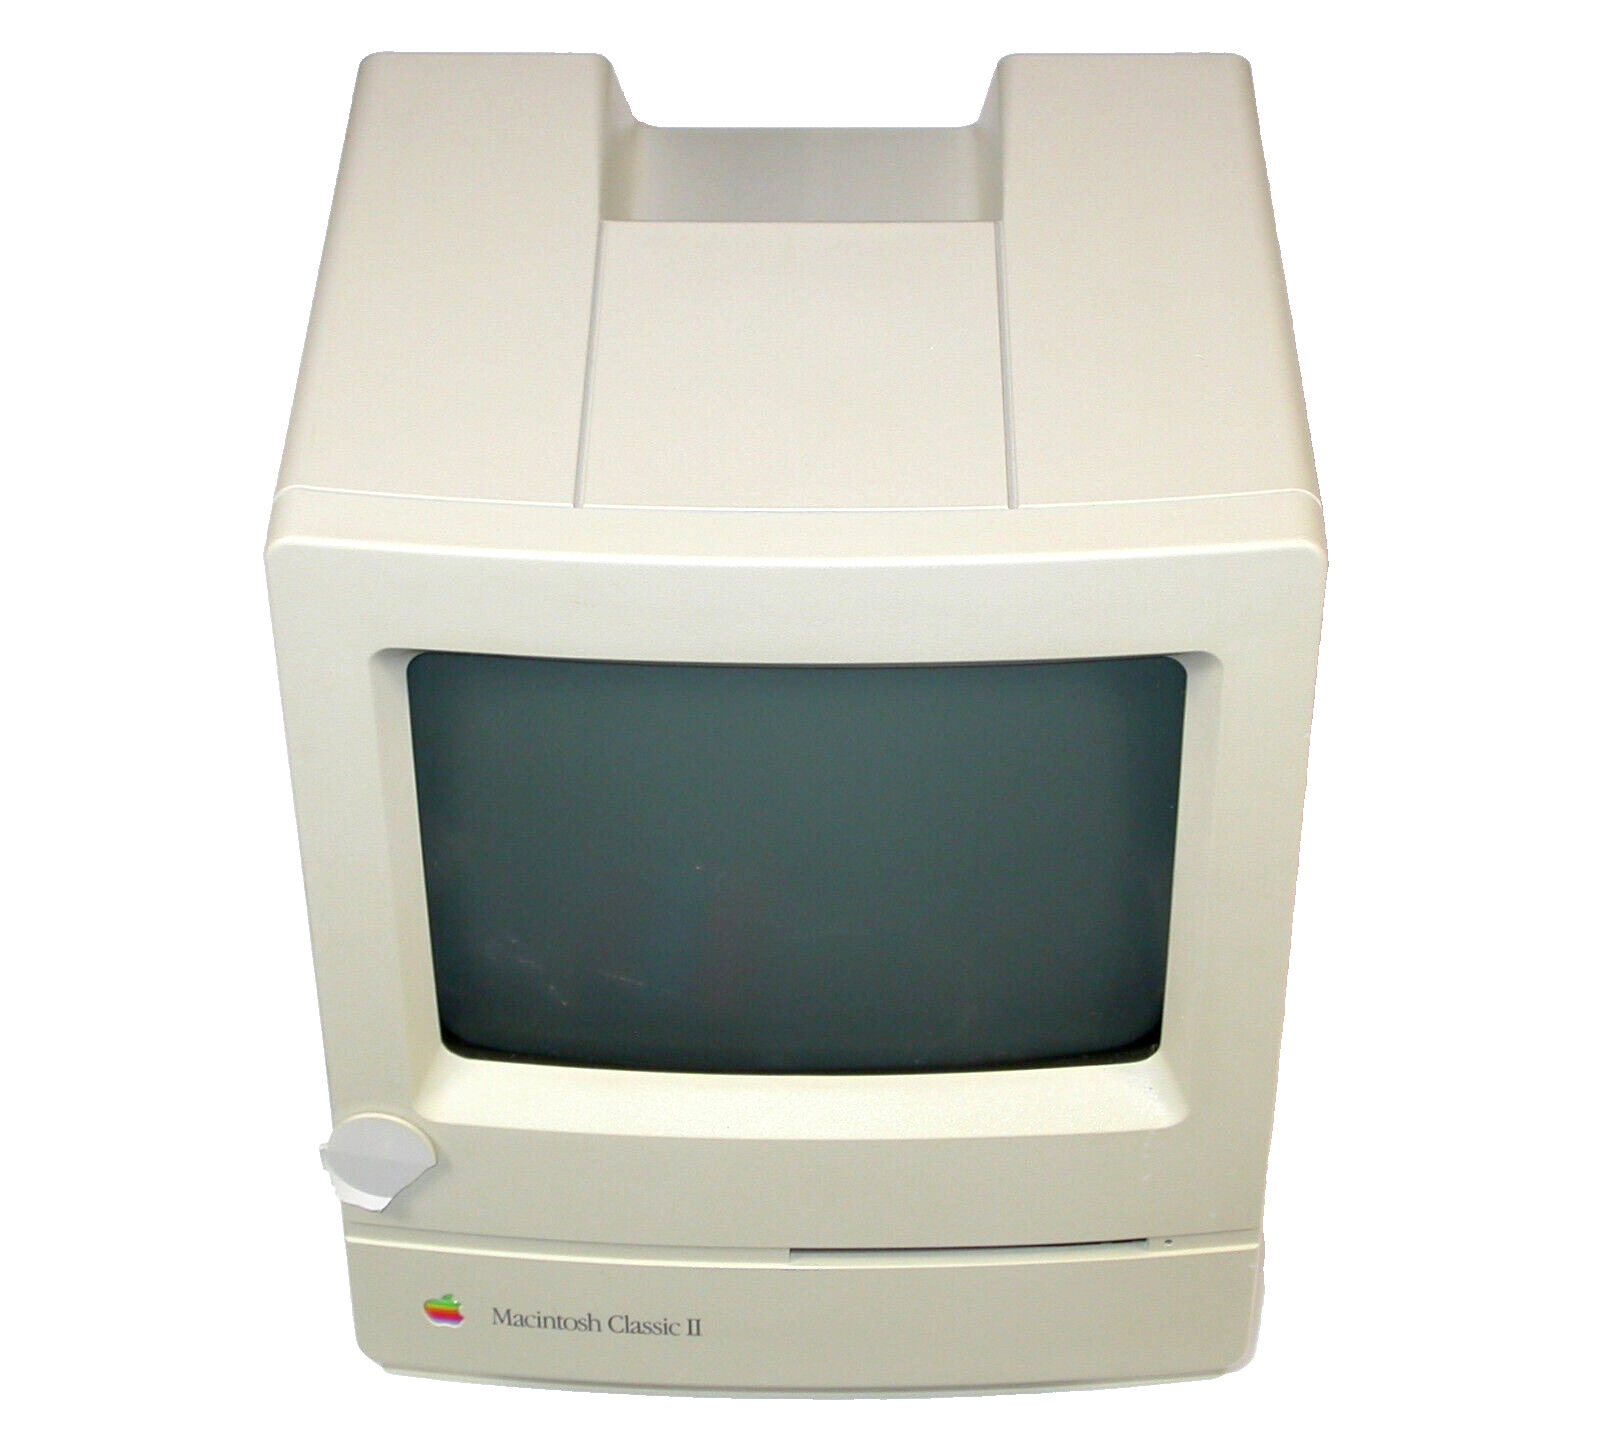 Vintage Apple Macintosh Classic II 1991 Computer M4150 W/ Power Cord